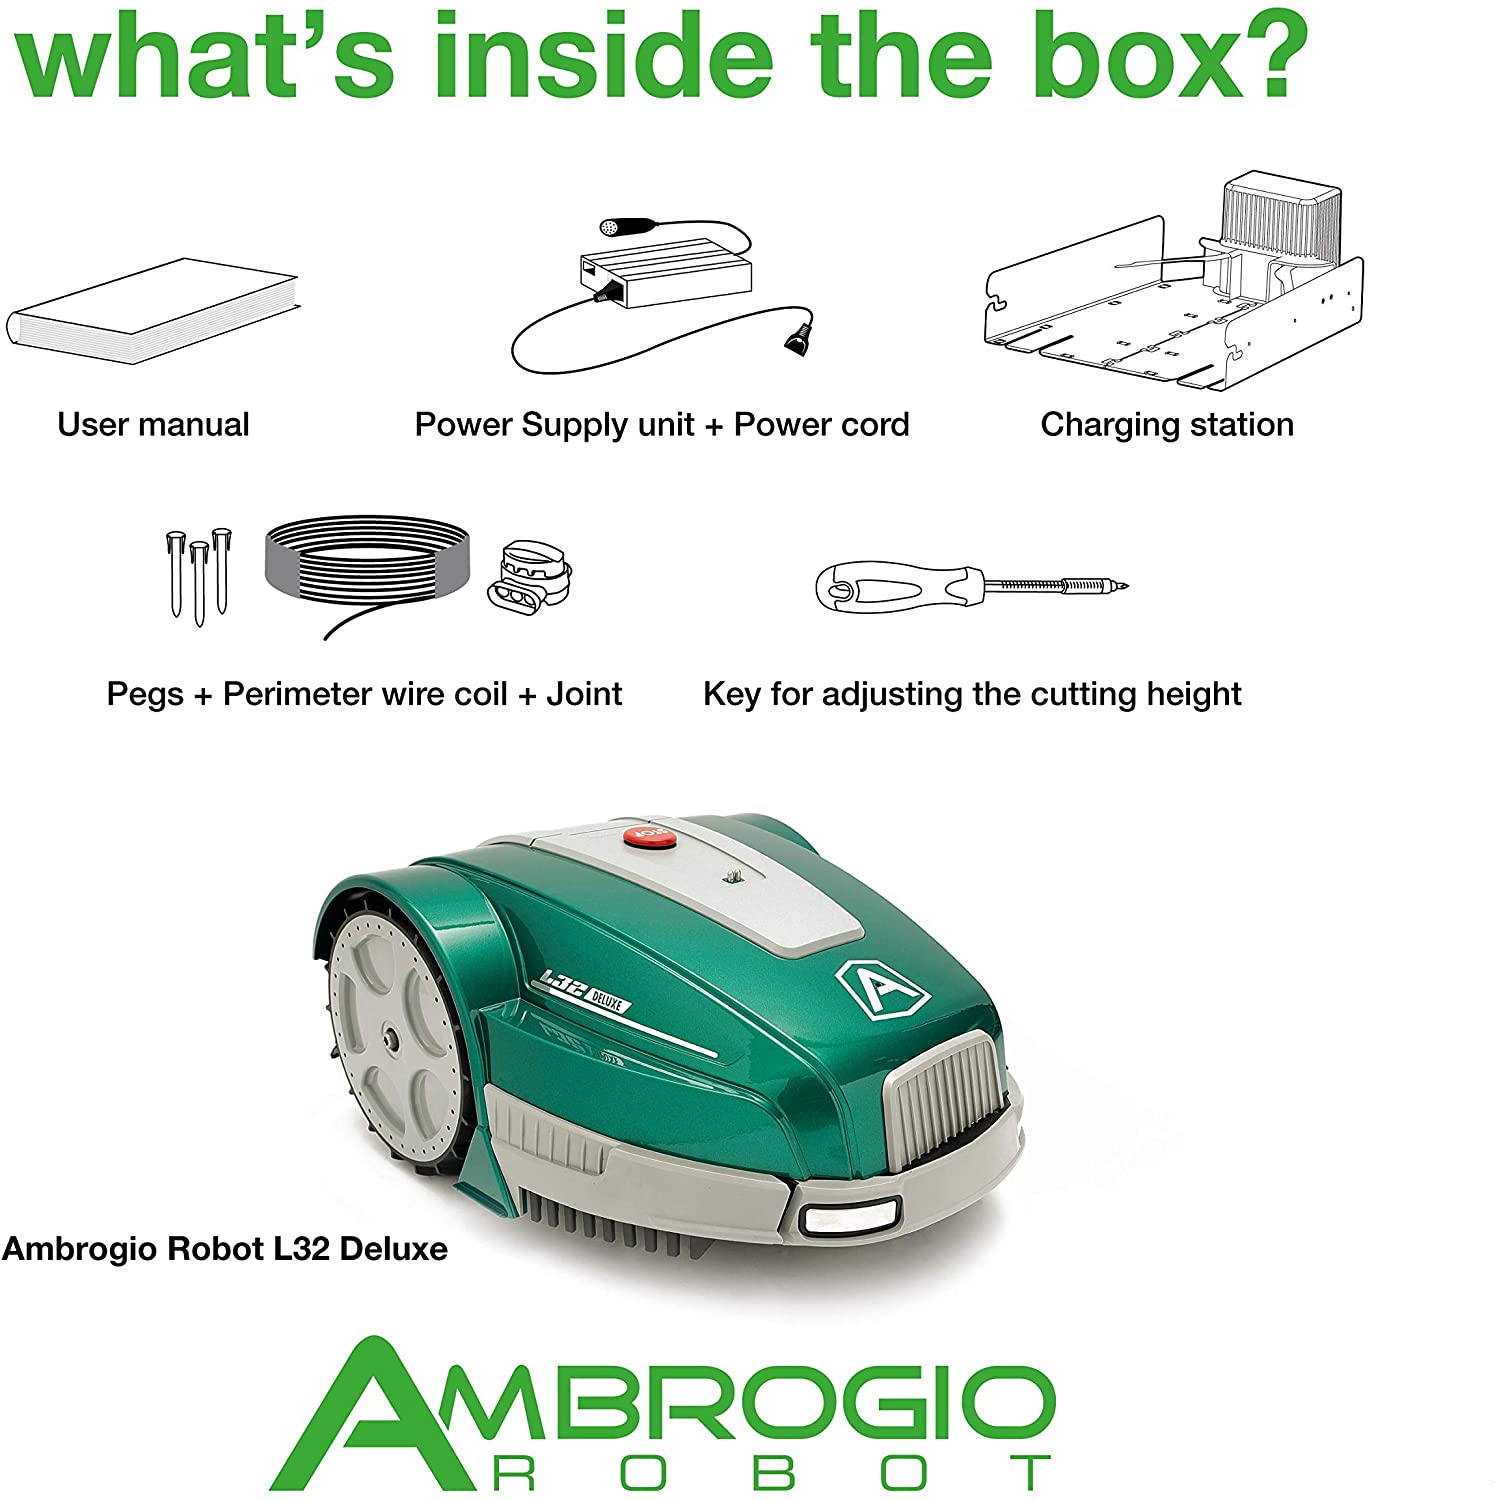 Ambrogio Robot L32 Deluxe